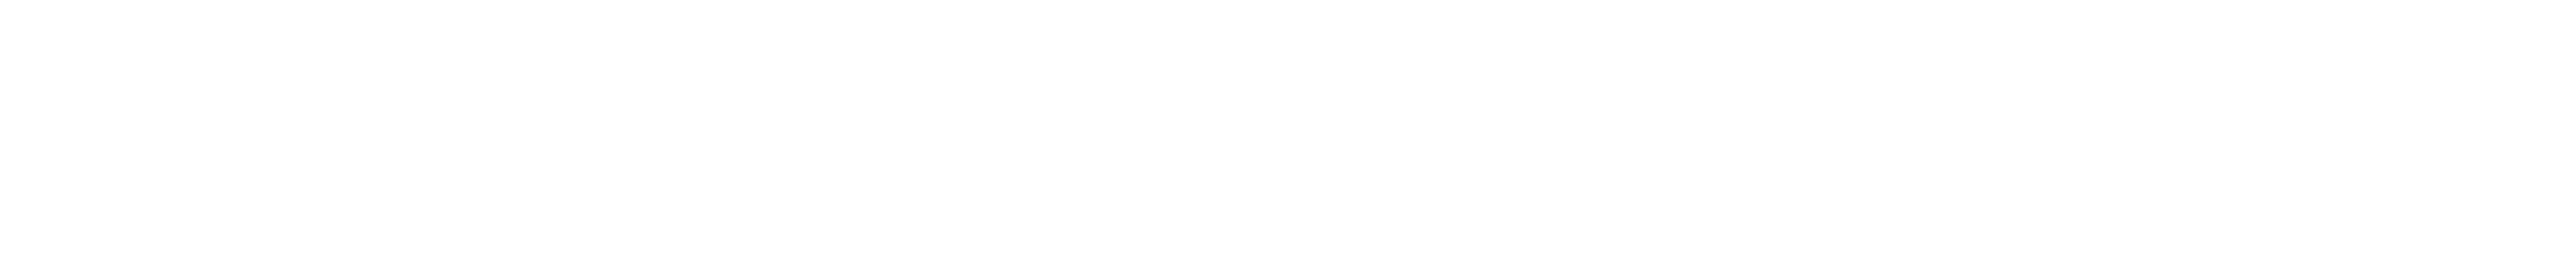 total Negotiation Logo